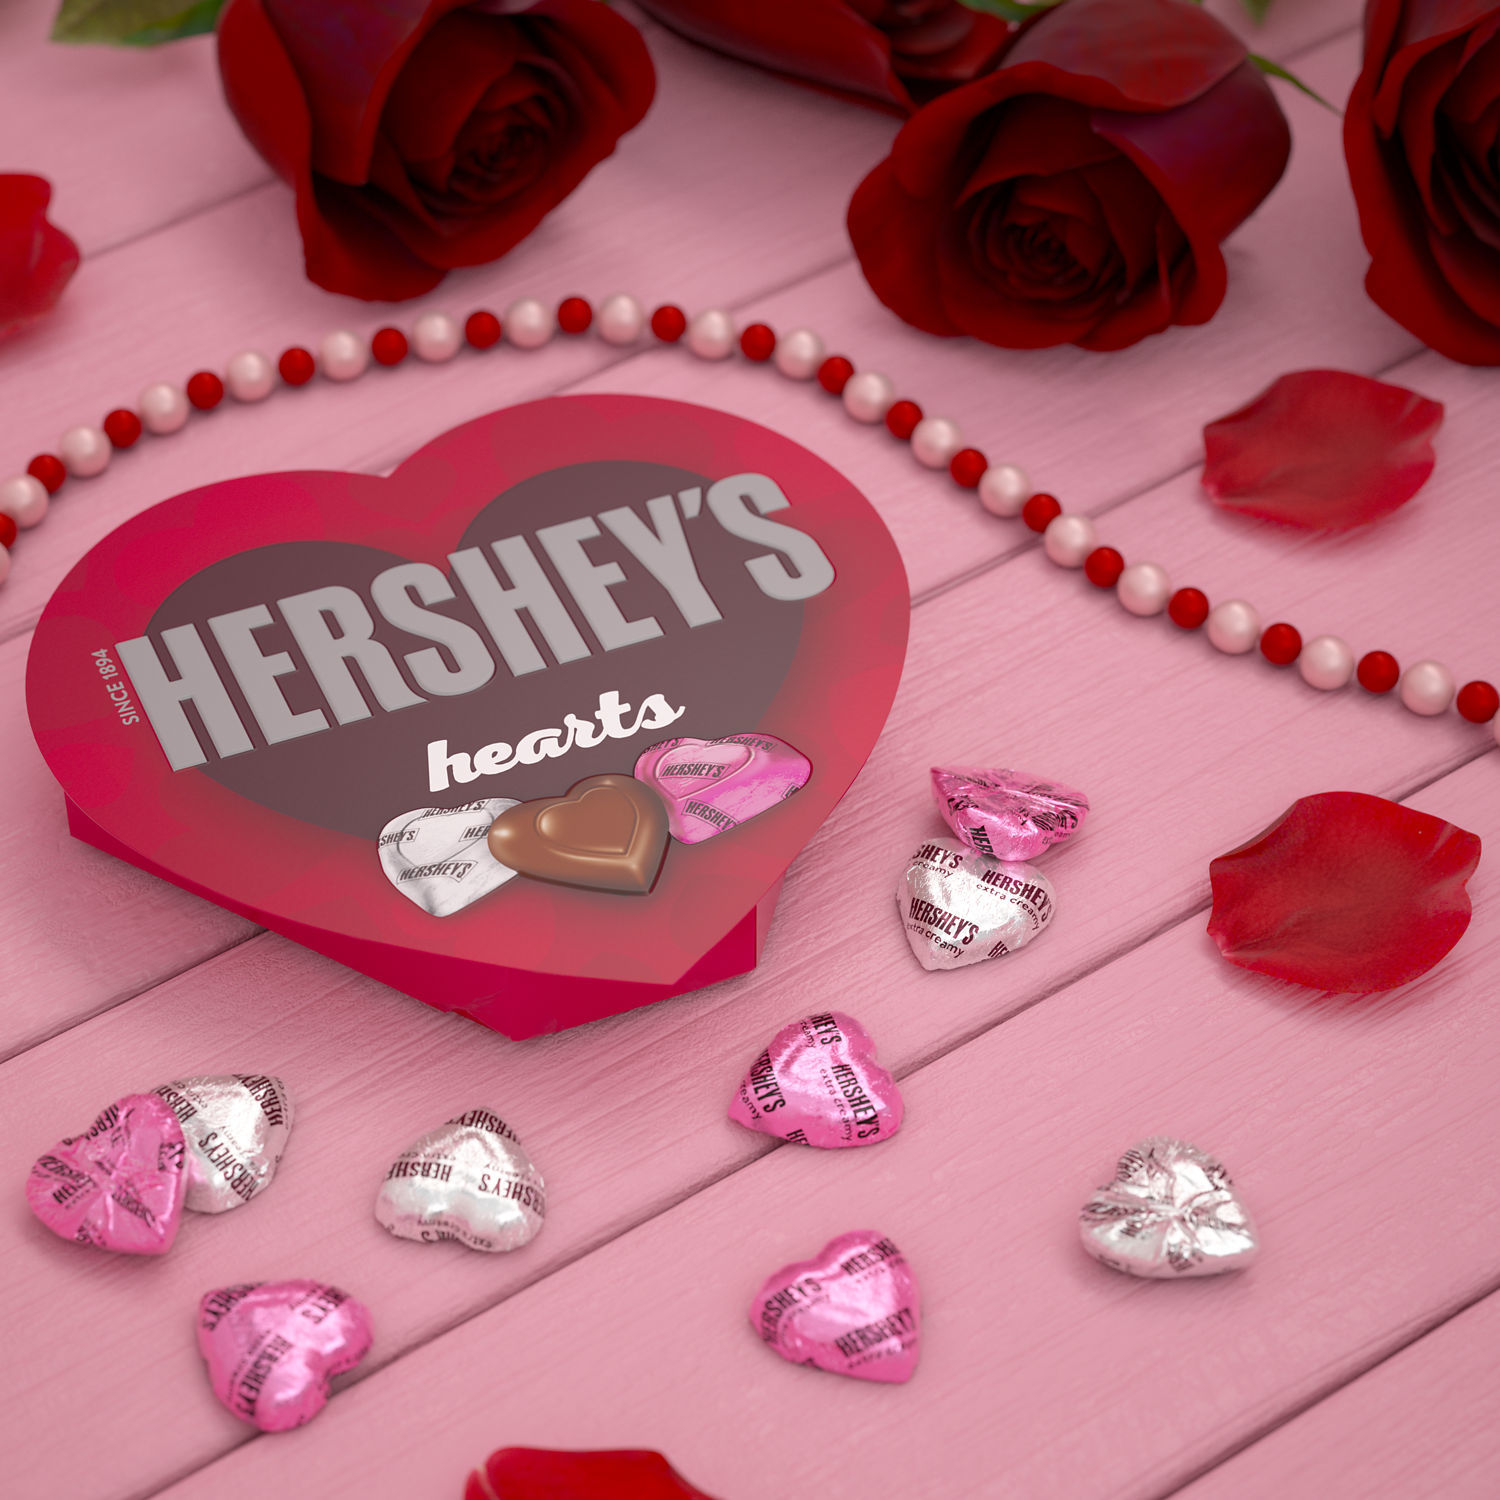 Hershey's Milk Chocolate Hearts Valentine's Day Candy, Gift Box 6.4 oz - image 4 of 6